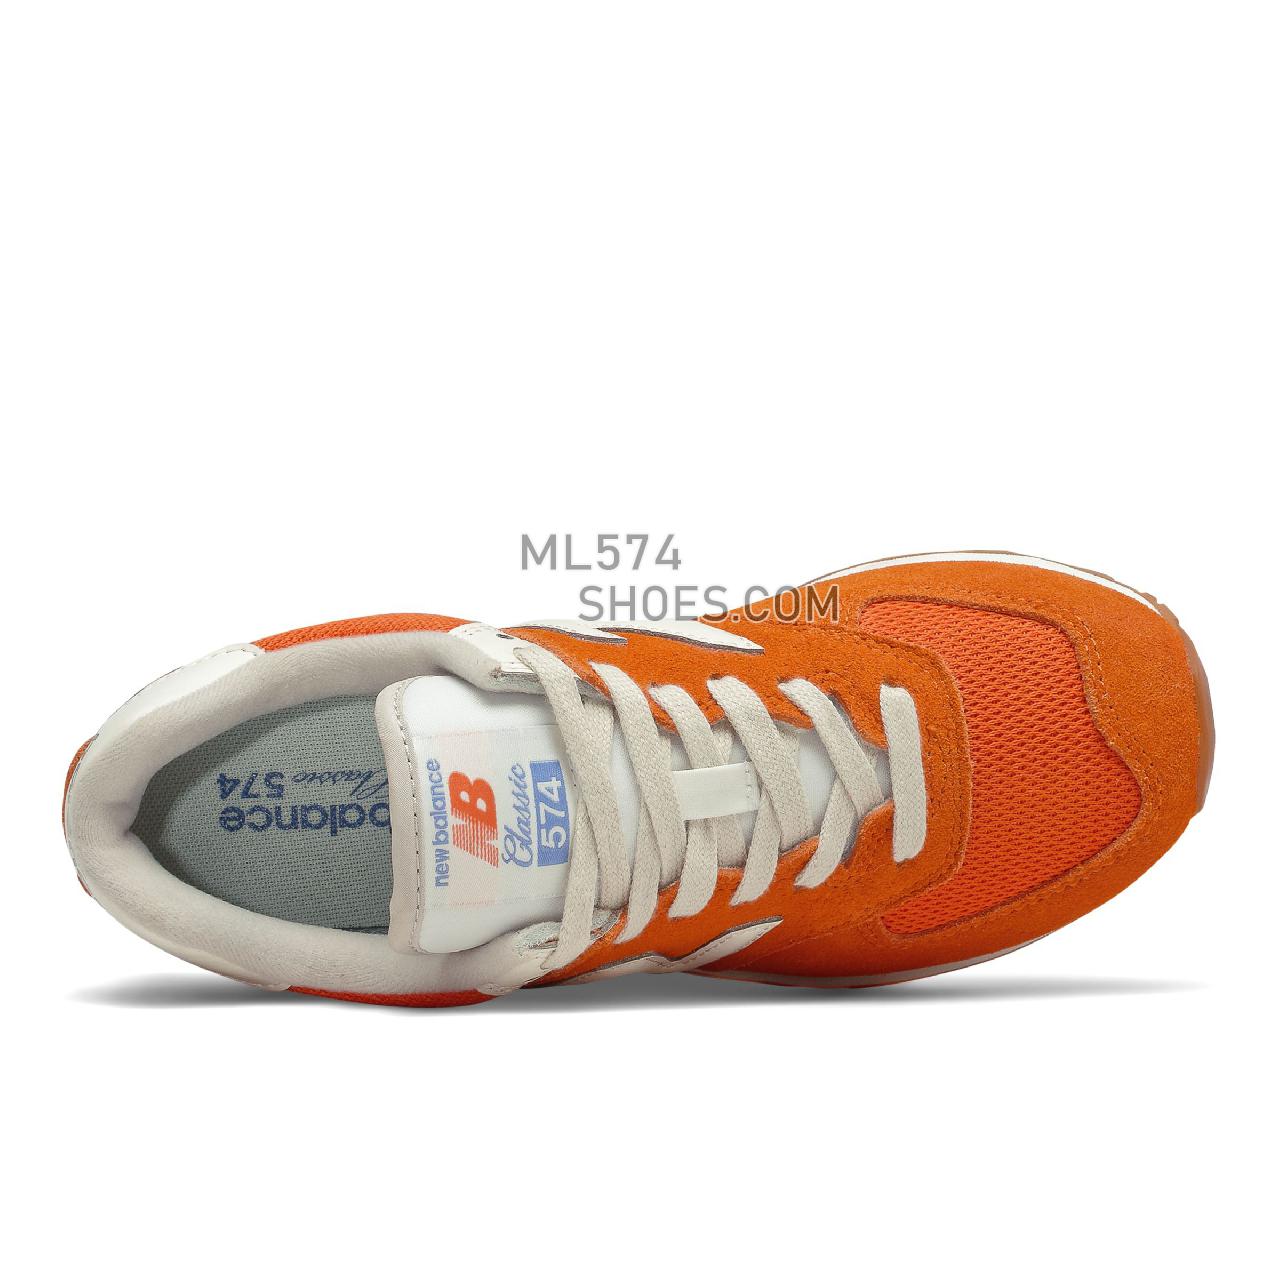 New Balance 574 - Women's Classic Sneakers - Varsity Orange with Stellar Blue - WL574VI2